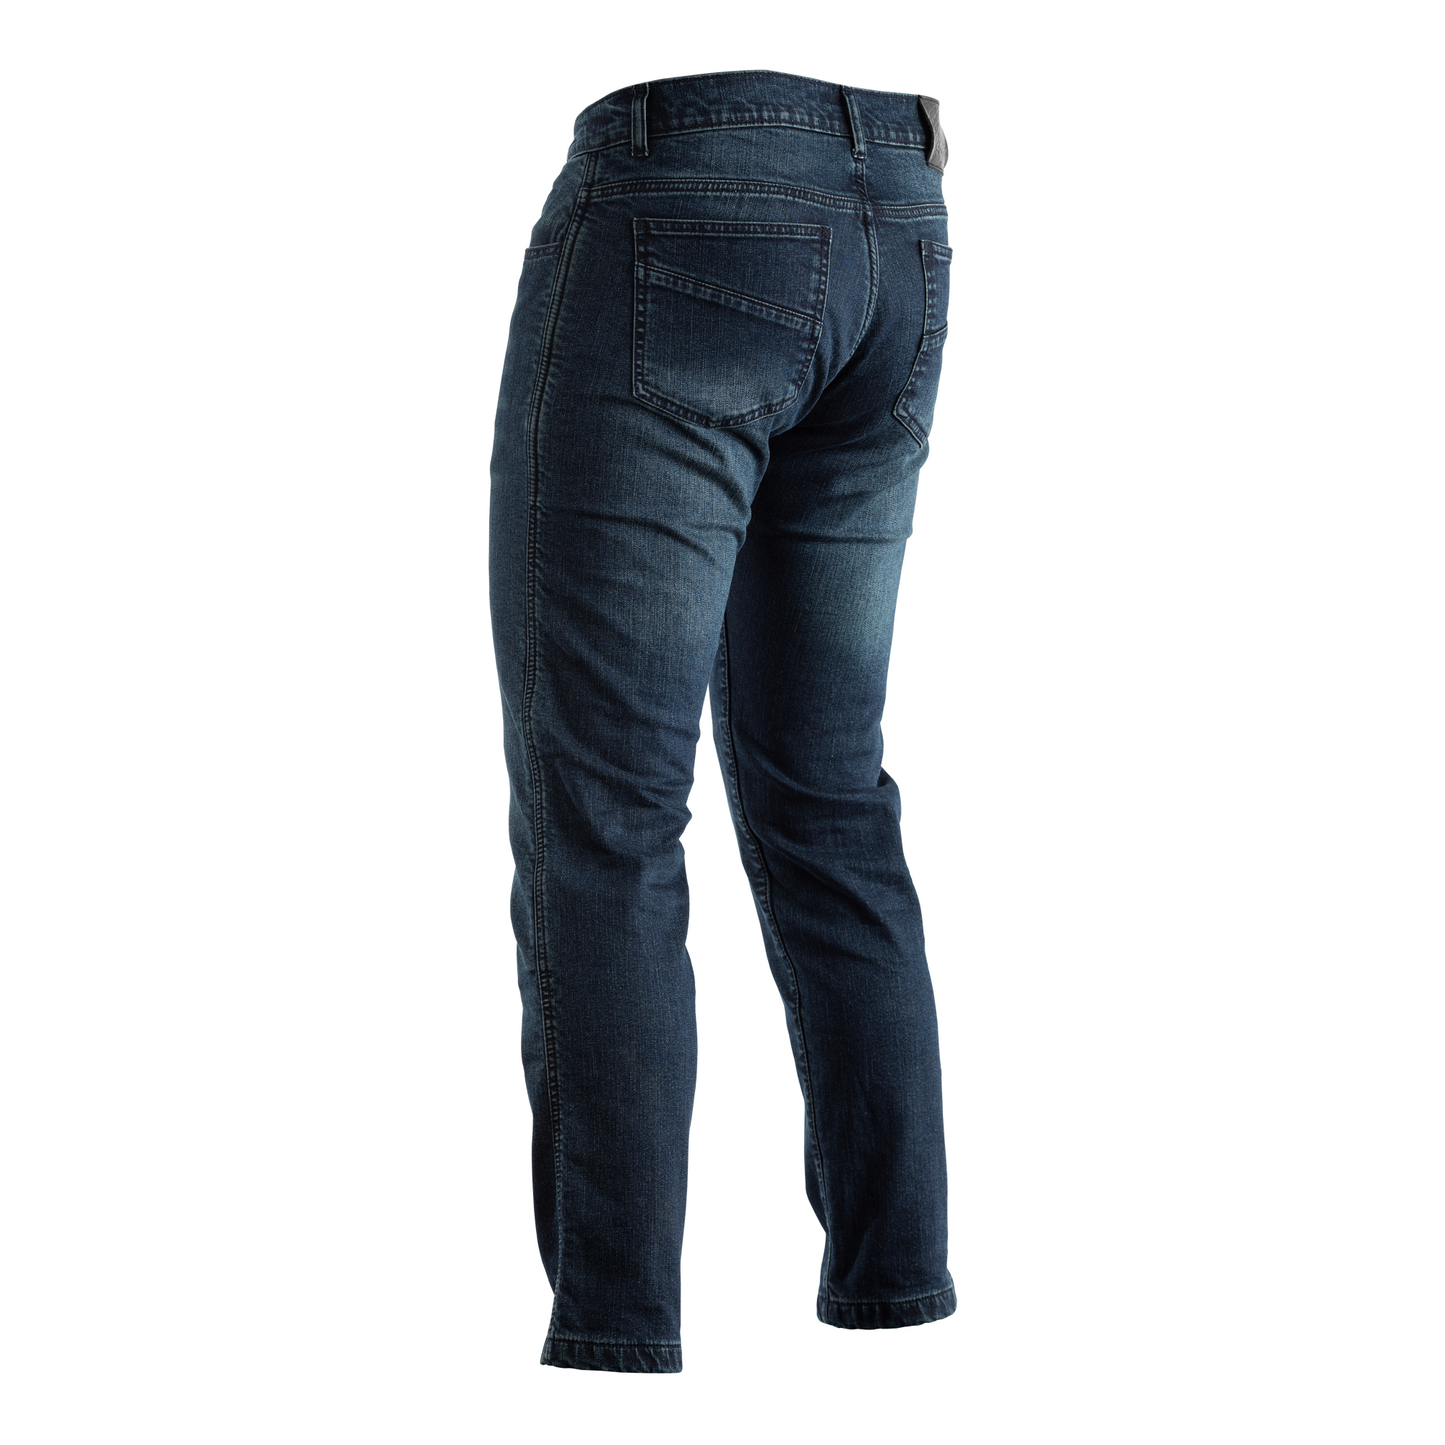 RST Metropolitan CE Men's Denim Riding Jeans - No Armour - Short Length - Dark Blue